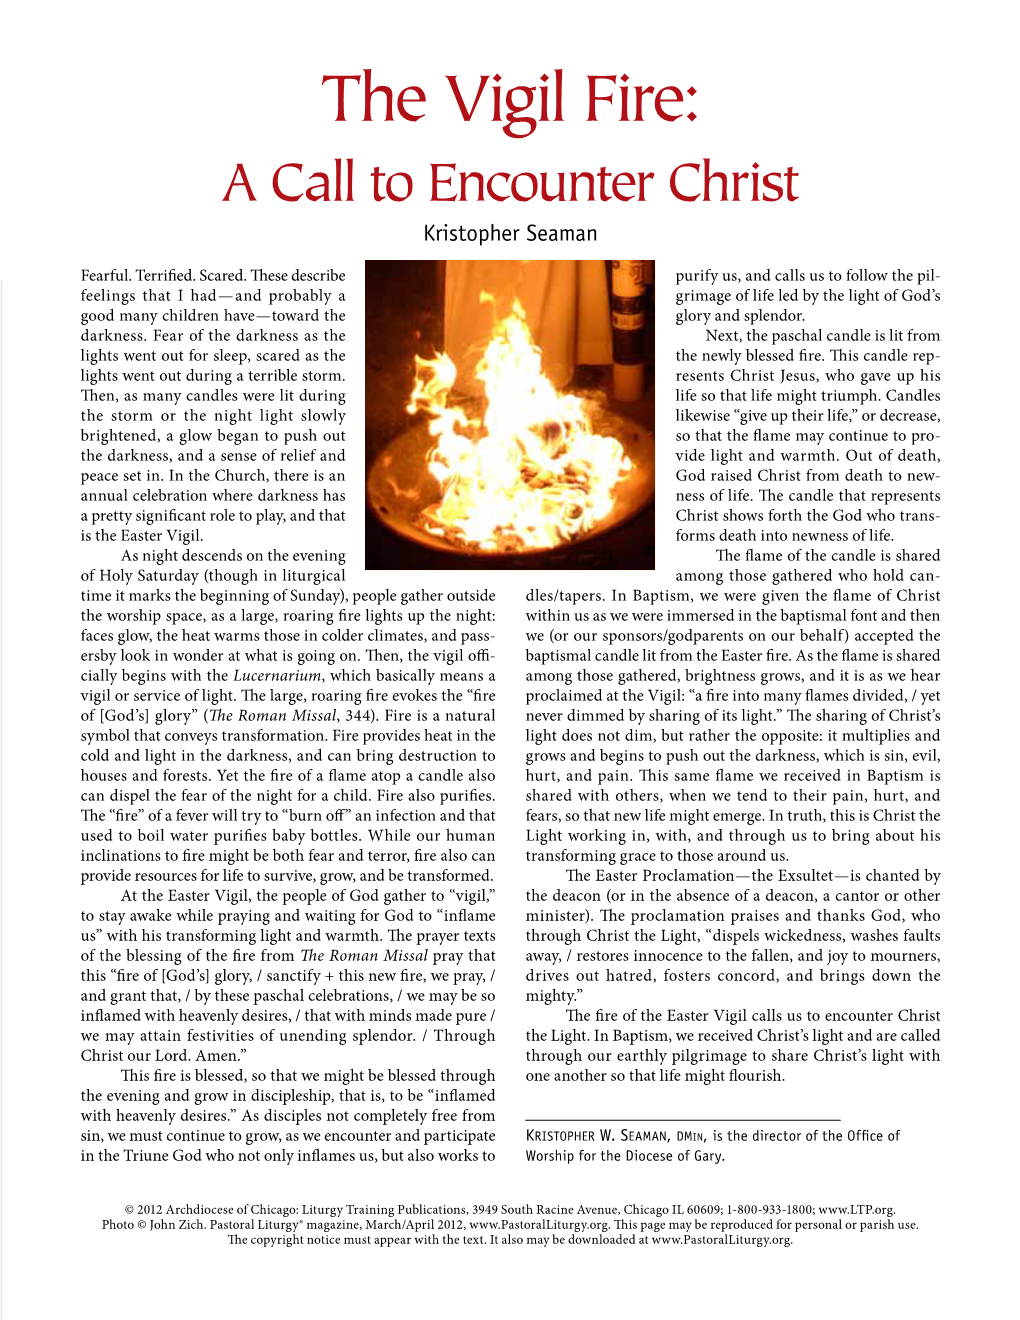 The Vigil Fire: a Call to Encounter Christ Kristopher Seaman